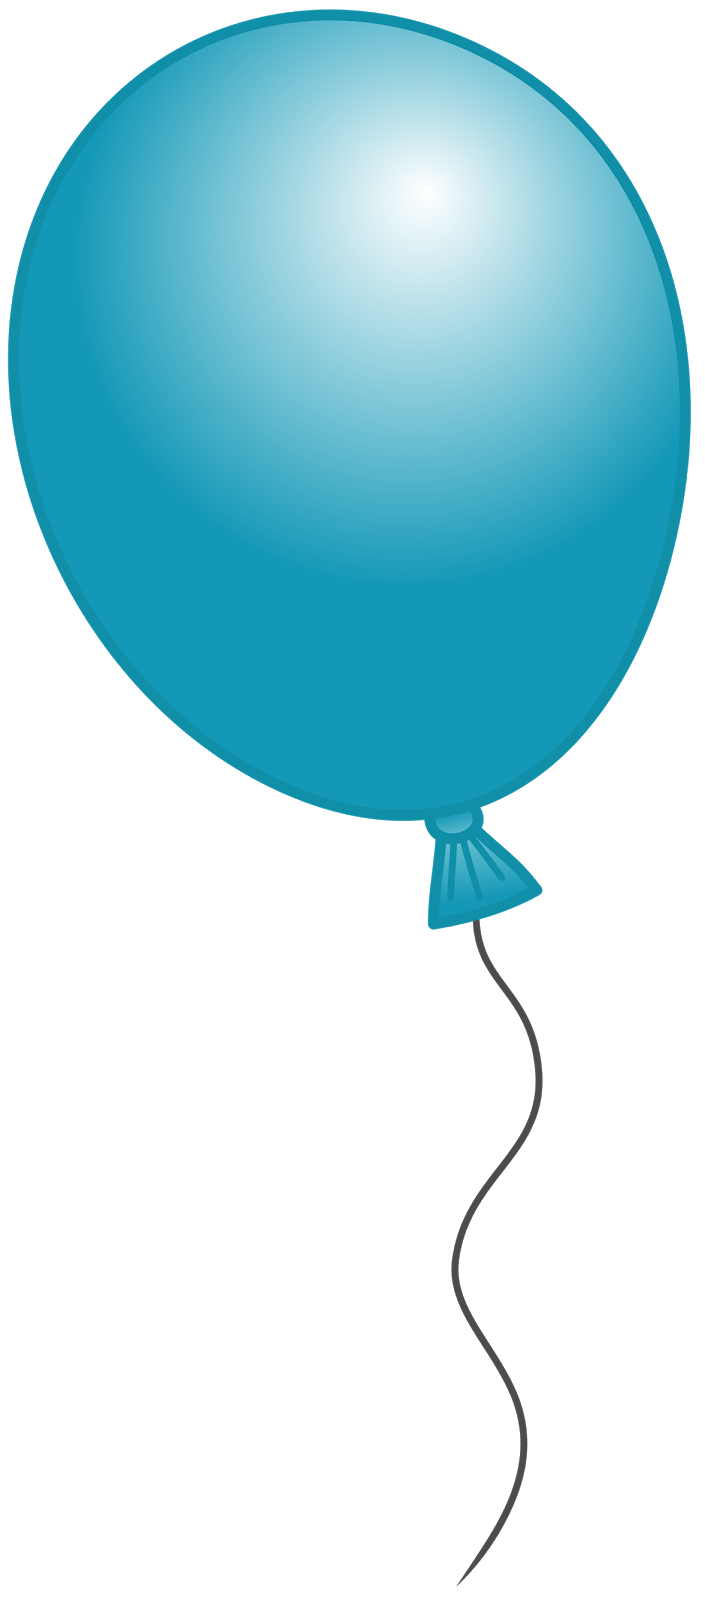 Balloon clipart: Blue Balloon Clipart